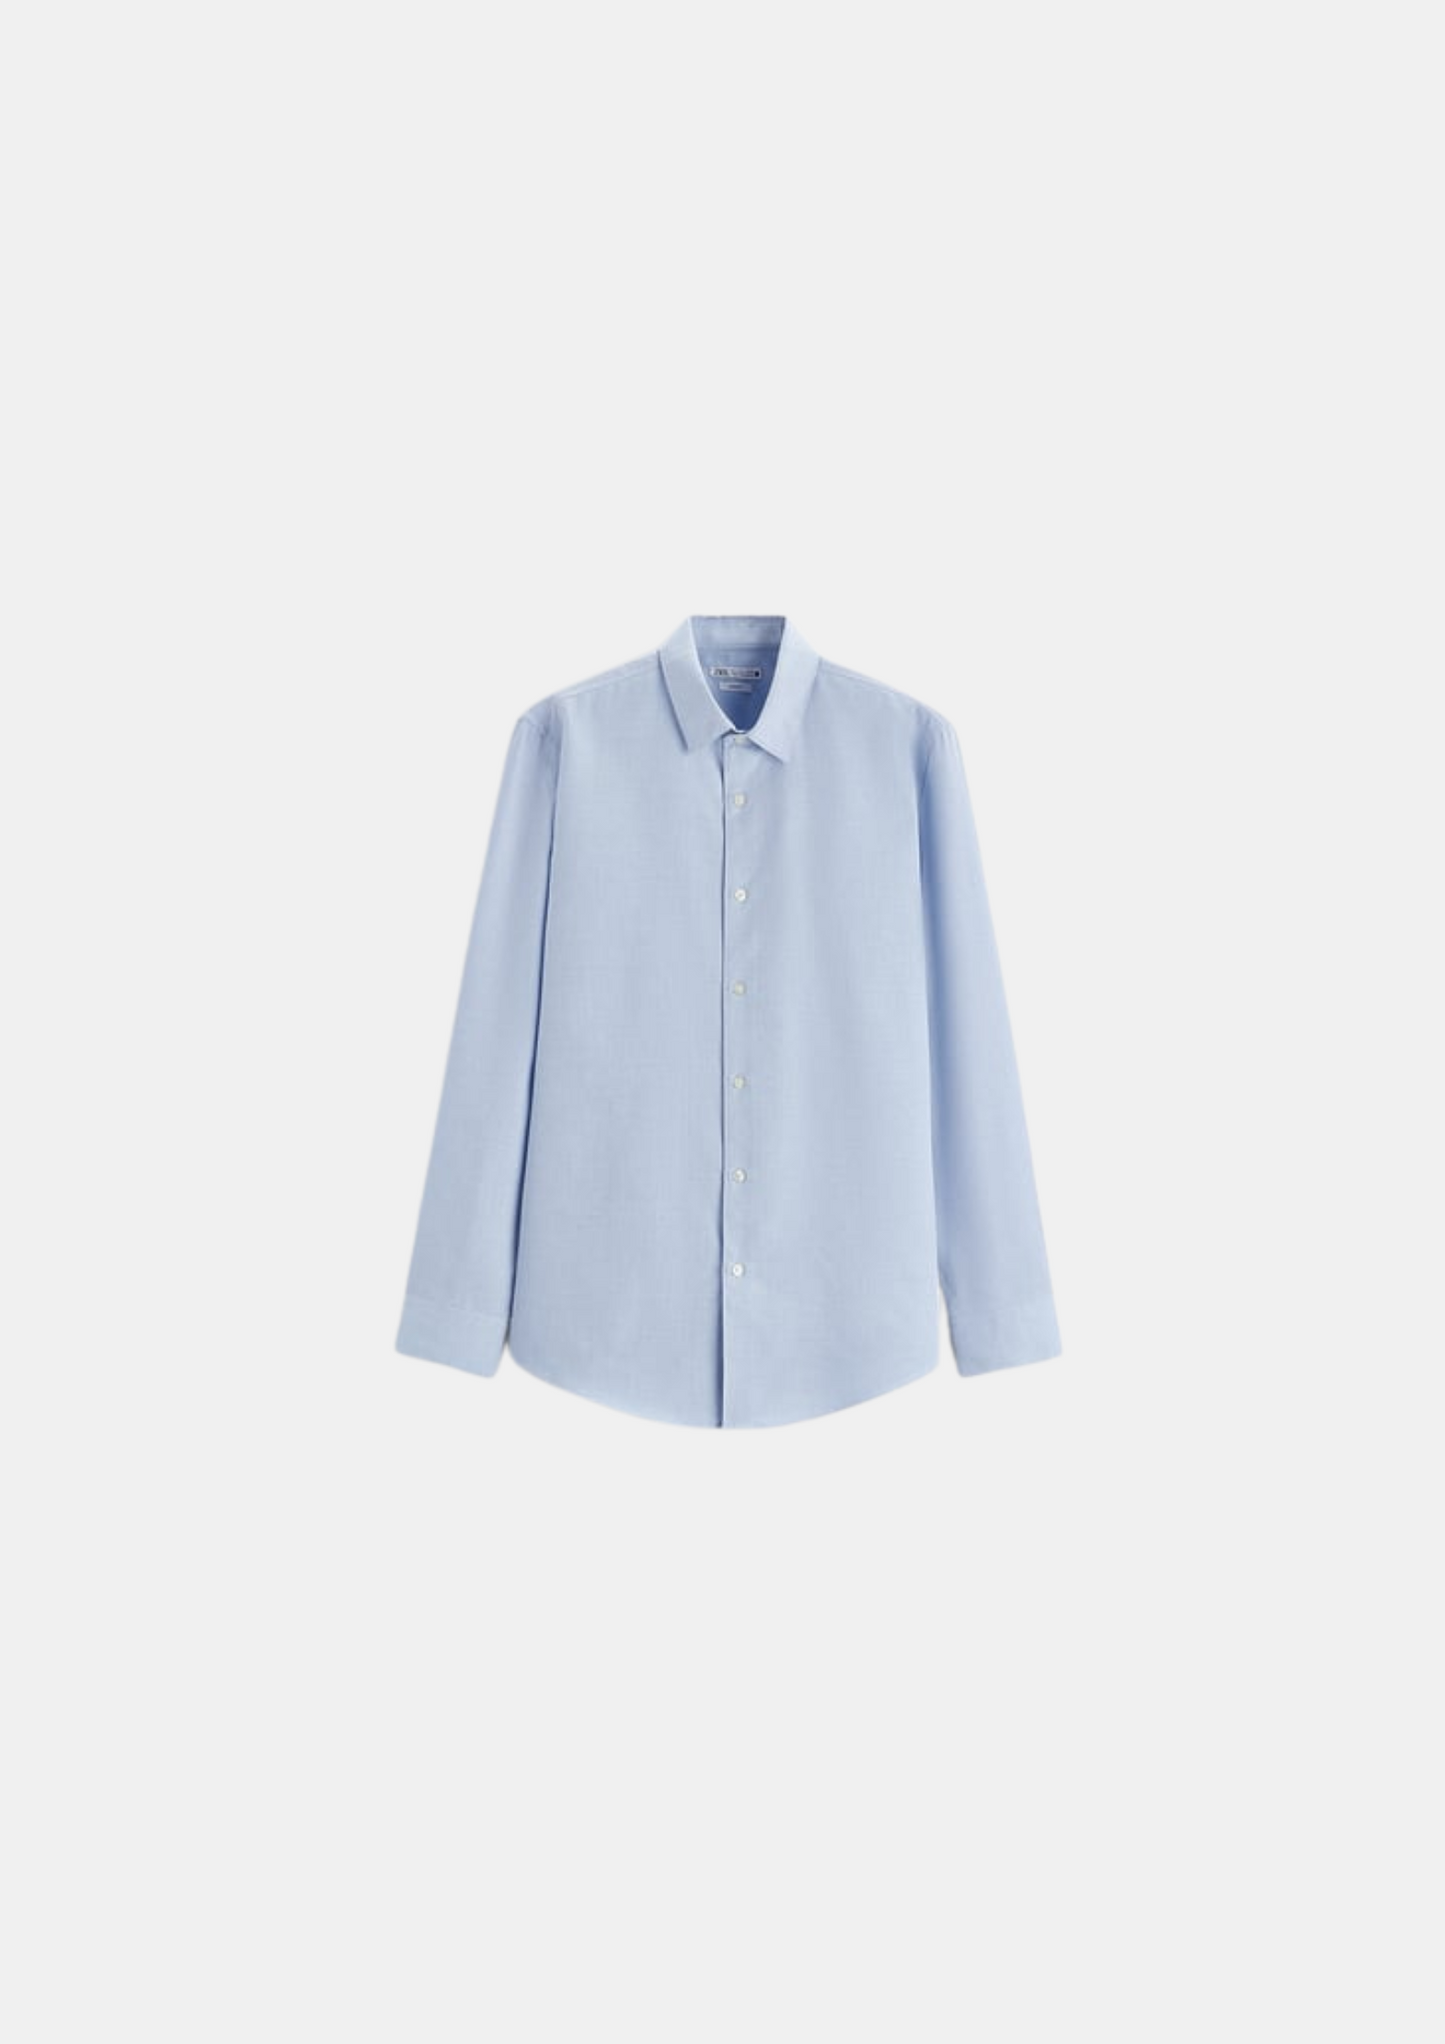 Camisa slim fit da Zara azul marinho